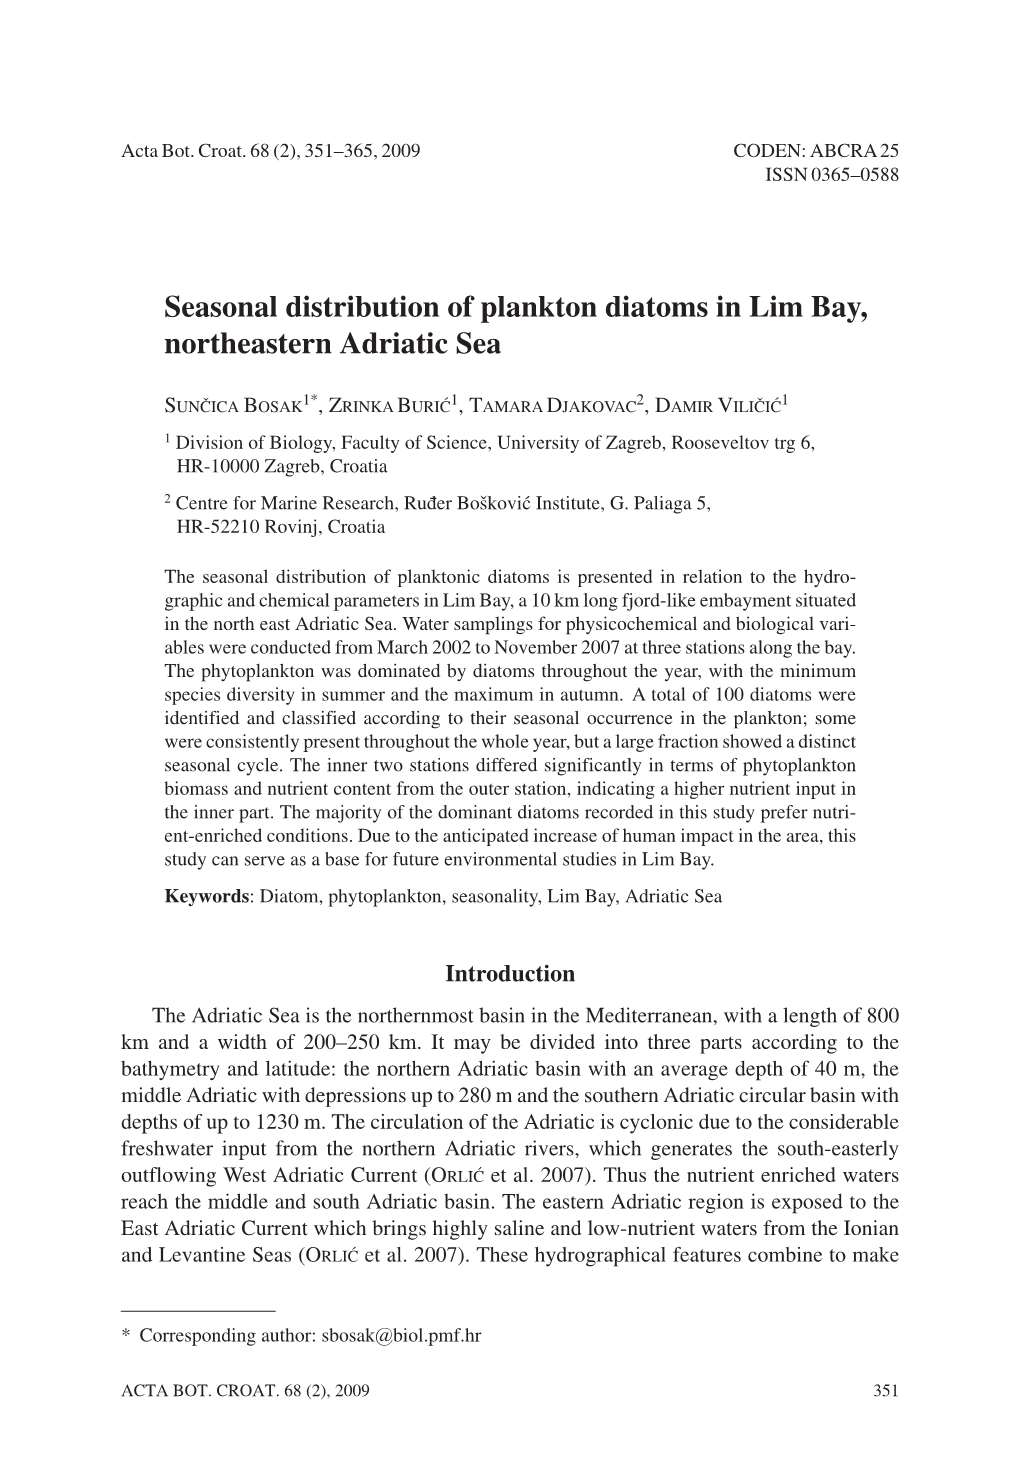 Seasonal Distribution of Plankton Diatoms in Lim Bay, Northeastern Adriatic Sea